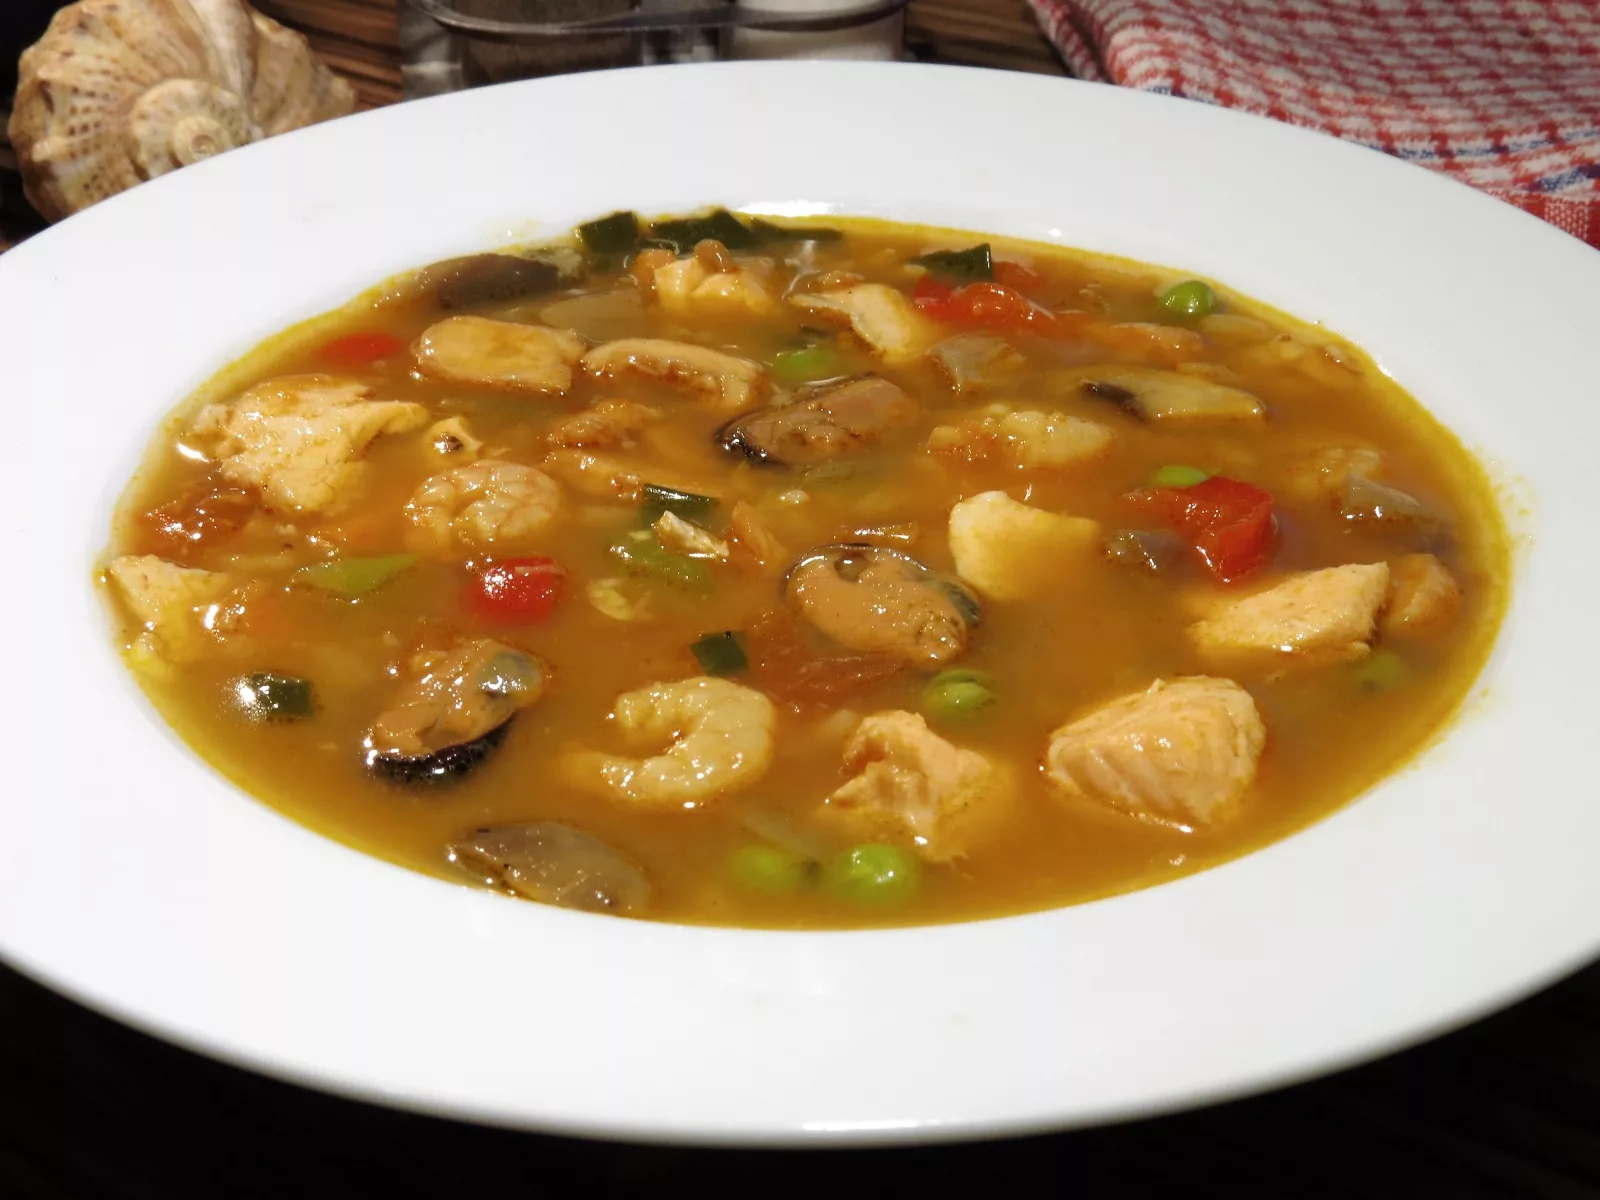 Sicilská rybí polévka (Zuppa di pesce alla siciliana)